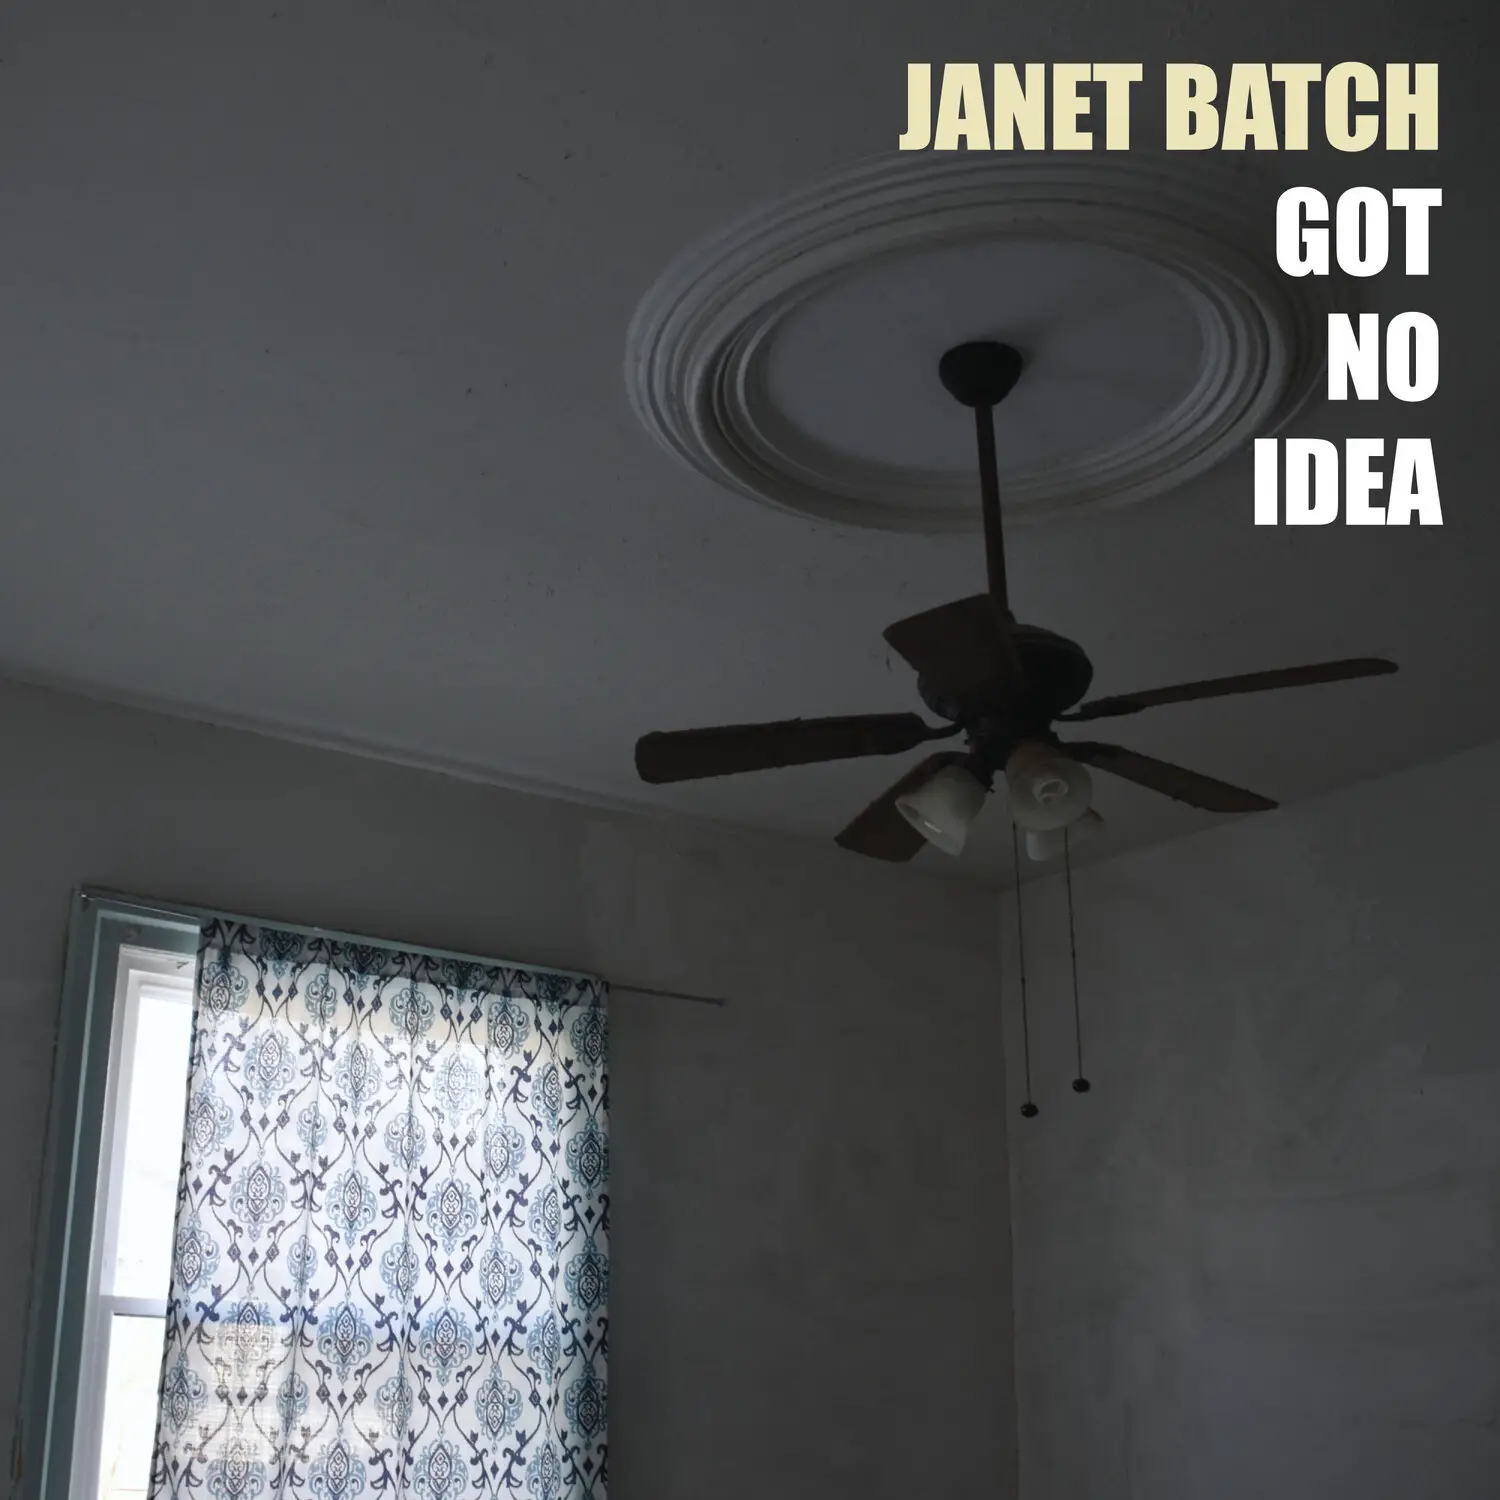 Janet Batch - "Got No Idea" Reaction | Opinions | LIVING LIFE FEARLESS